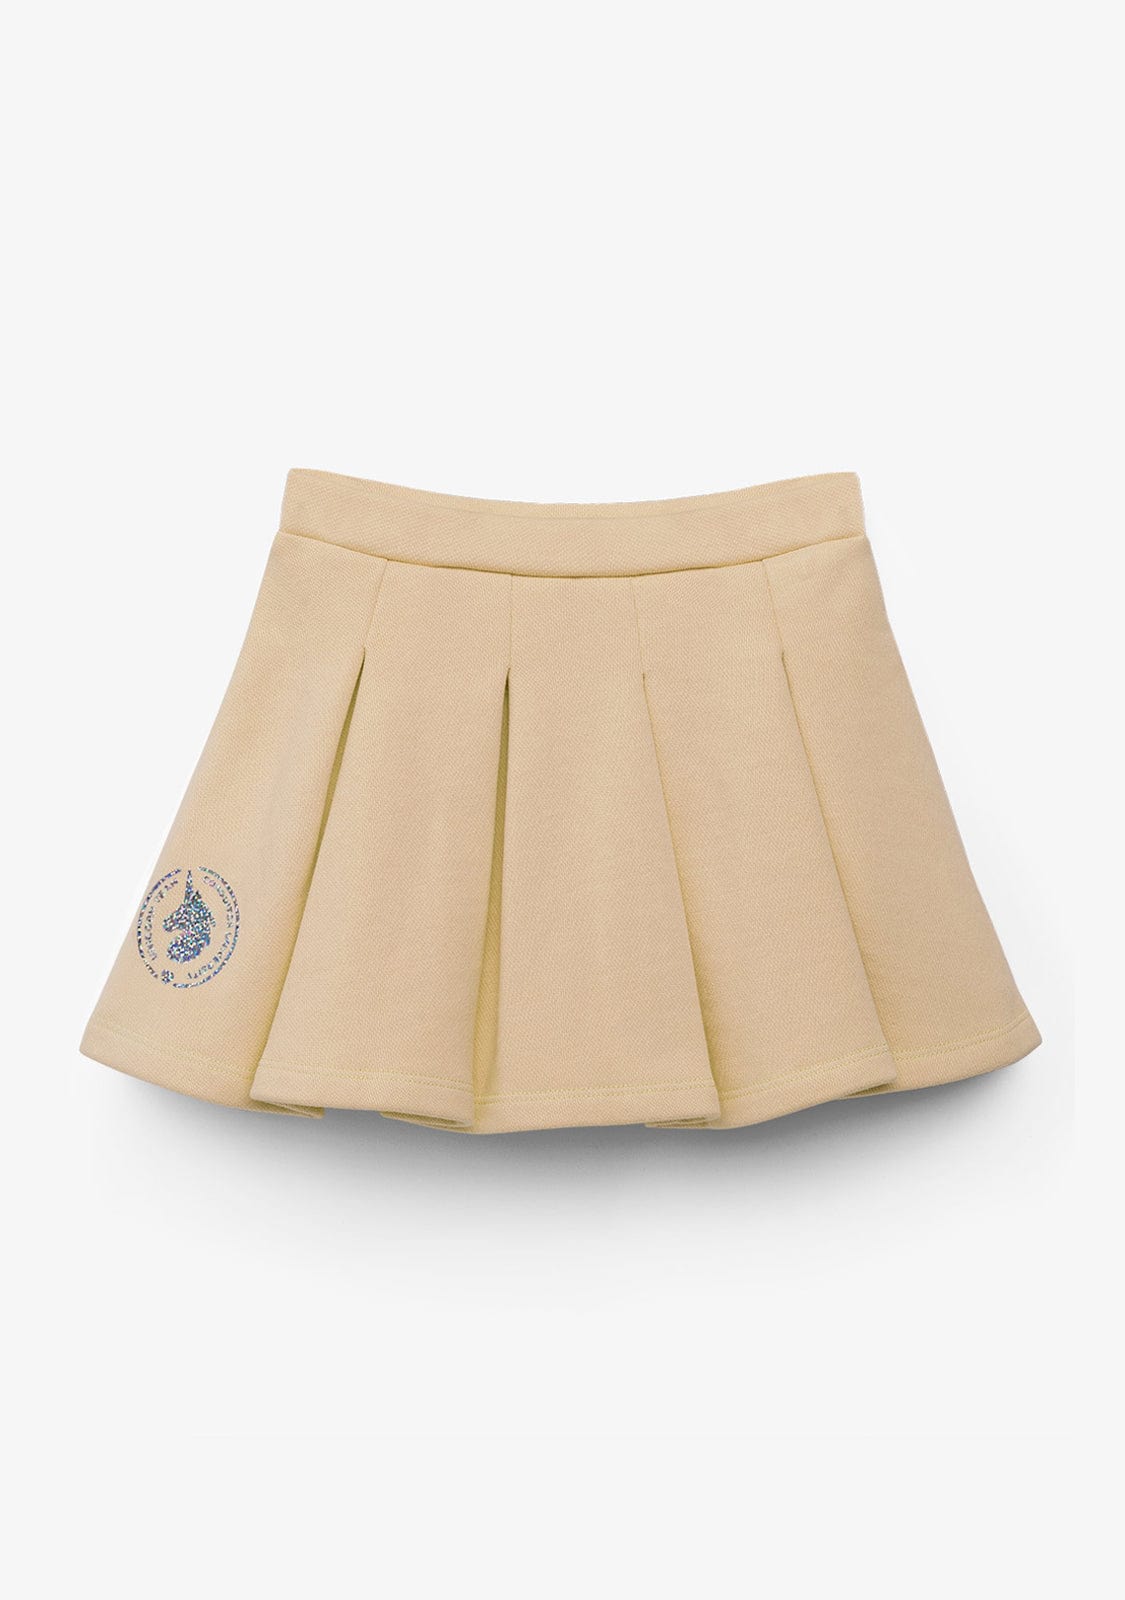 CONGUITOS TEXTIL Clothing Girl's Beige Unicorn Skirt